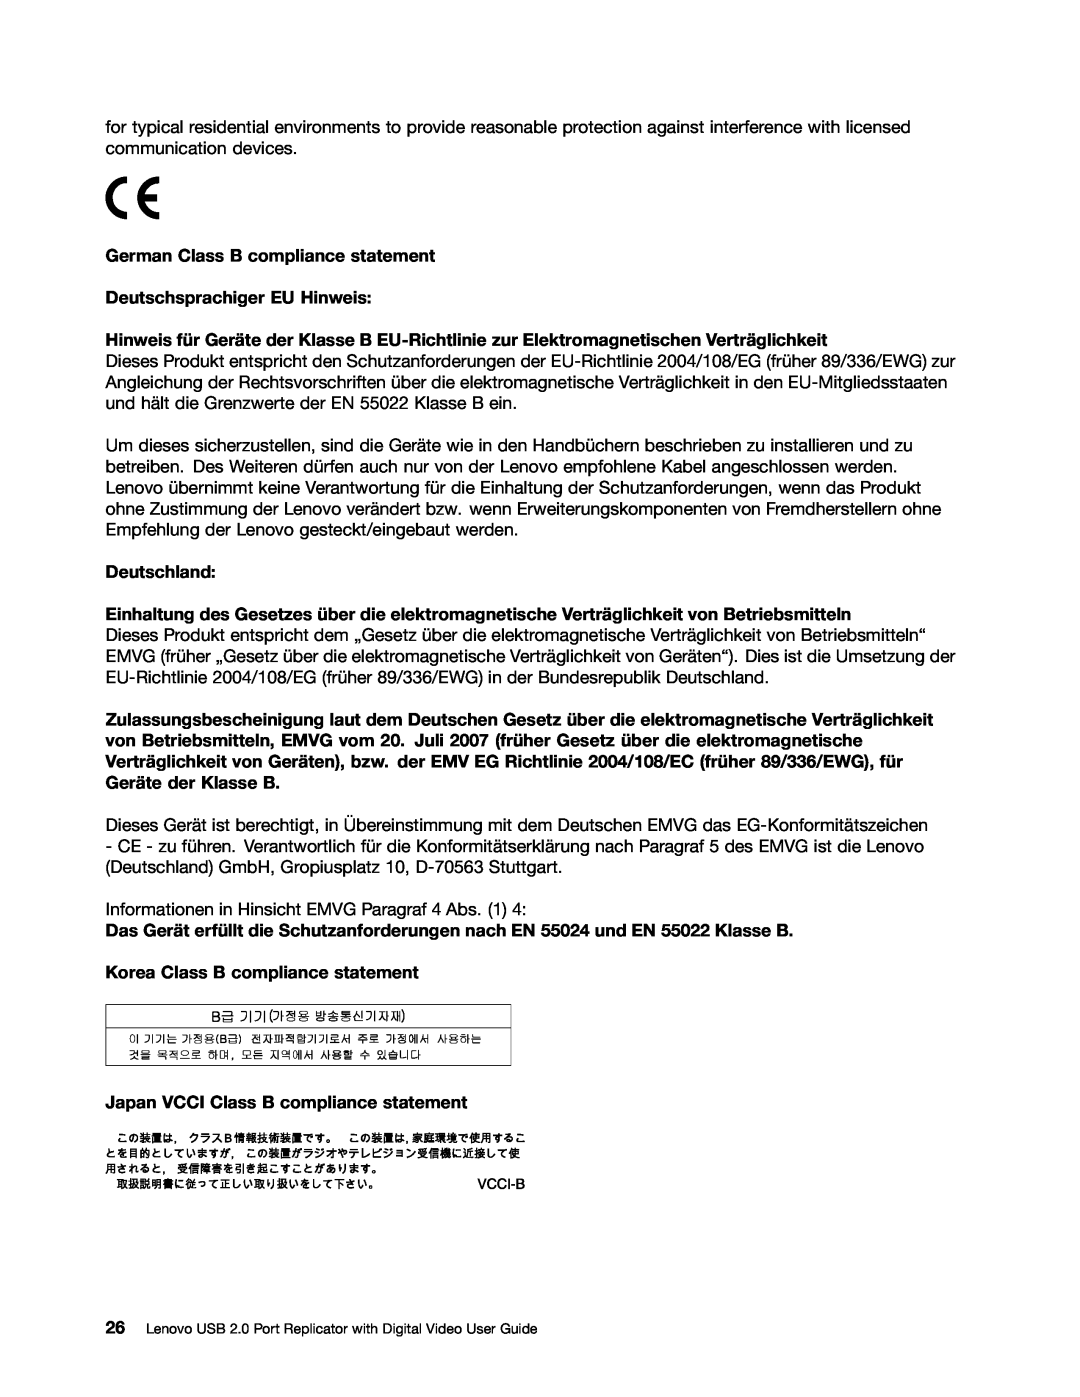 Lenovo 0A33942 manual German Class B compliance statement 